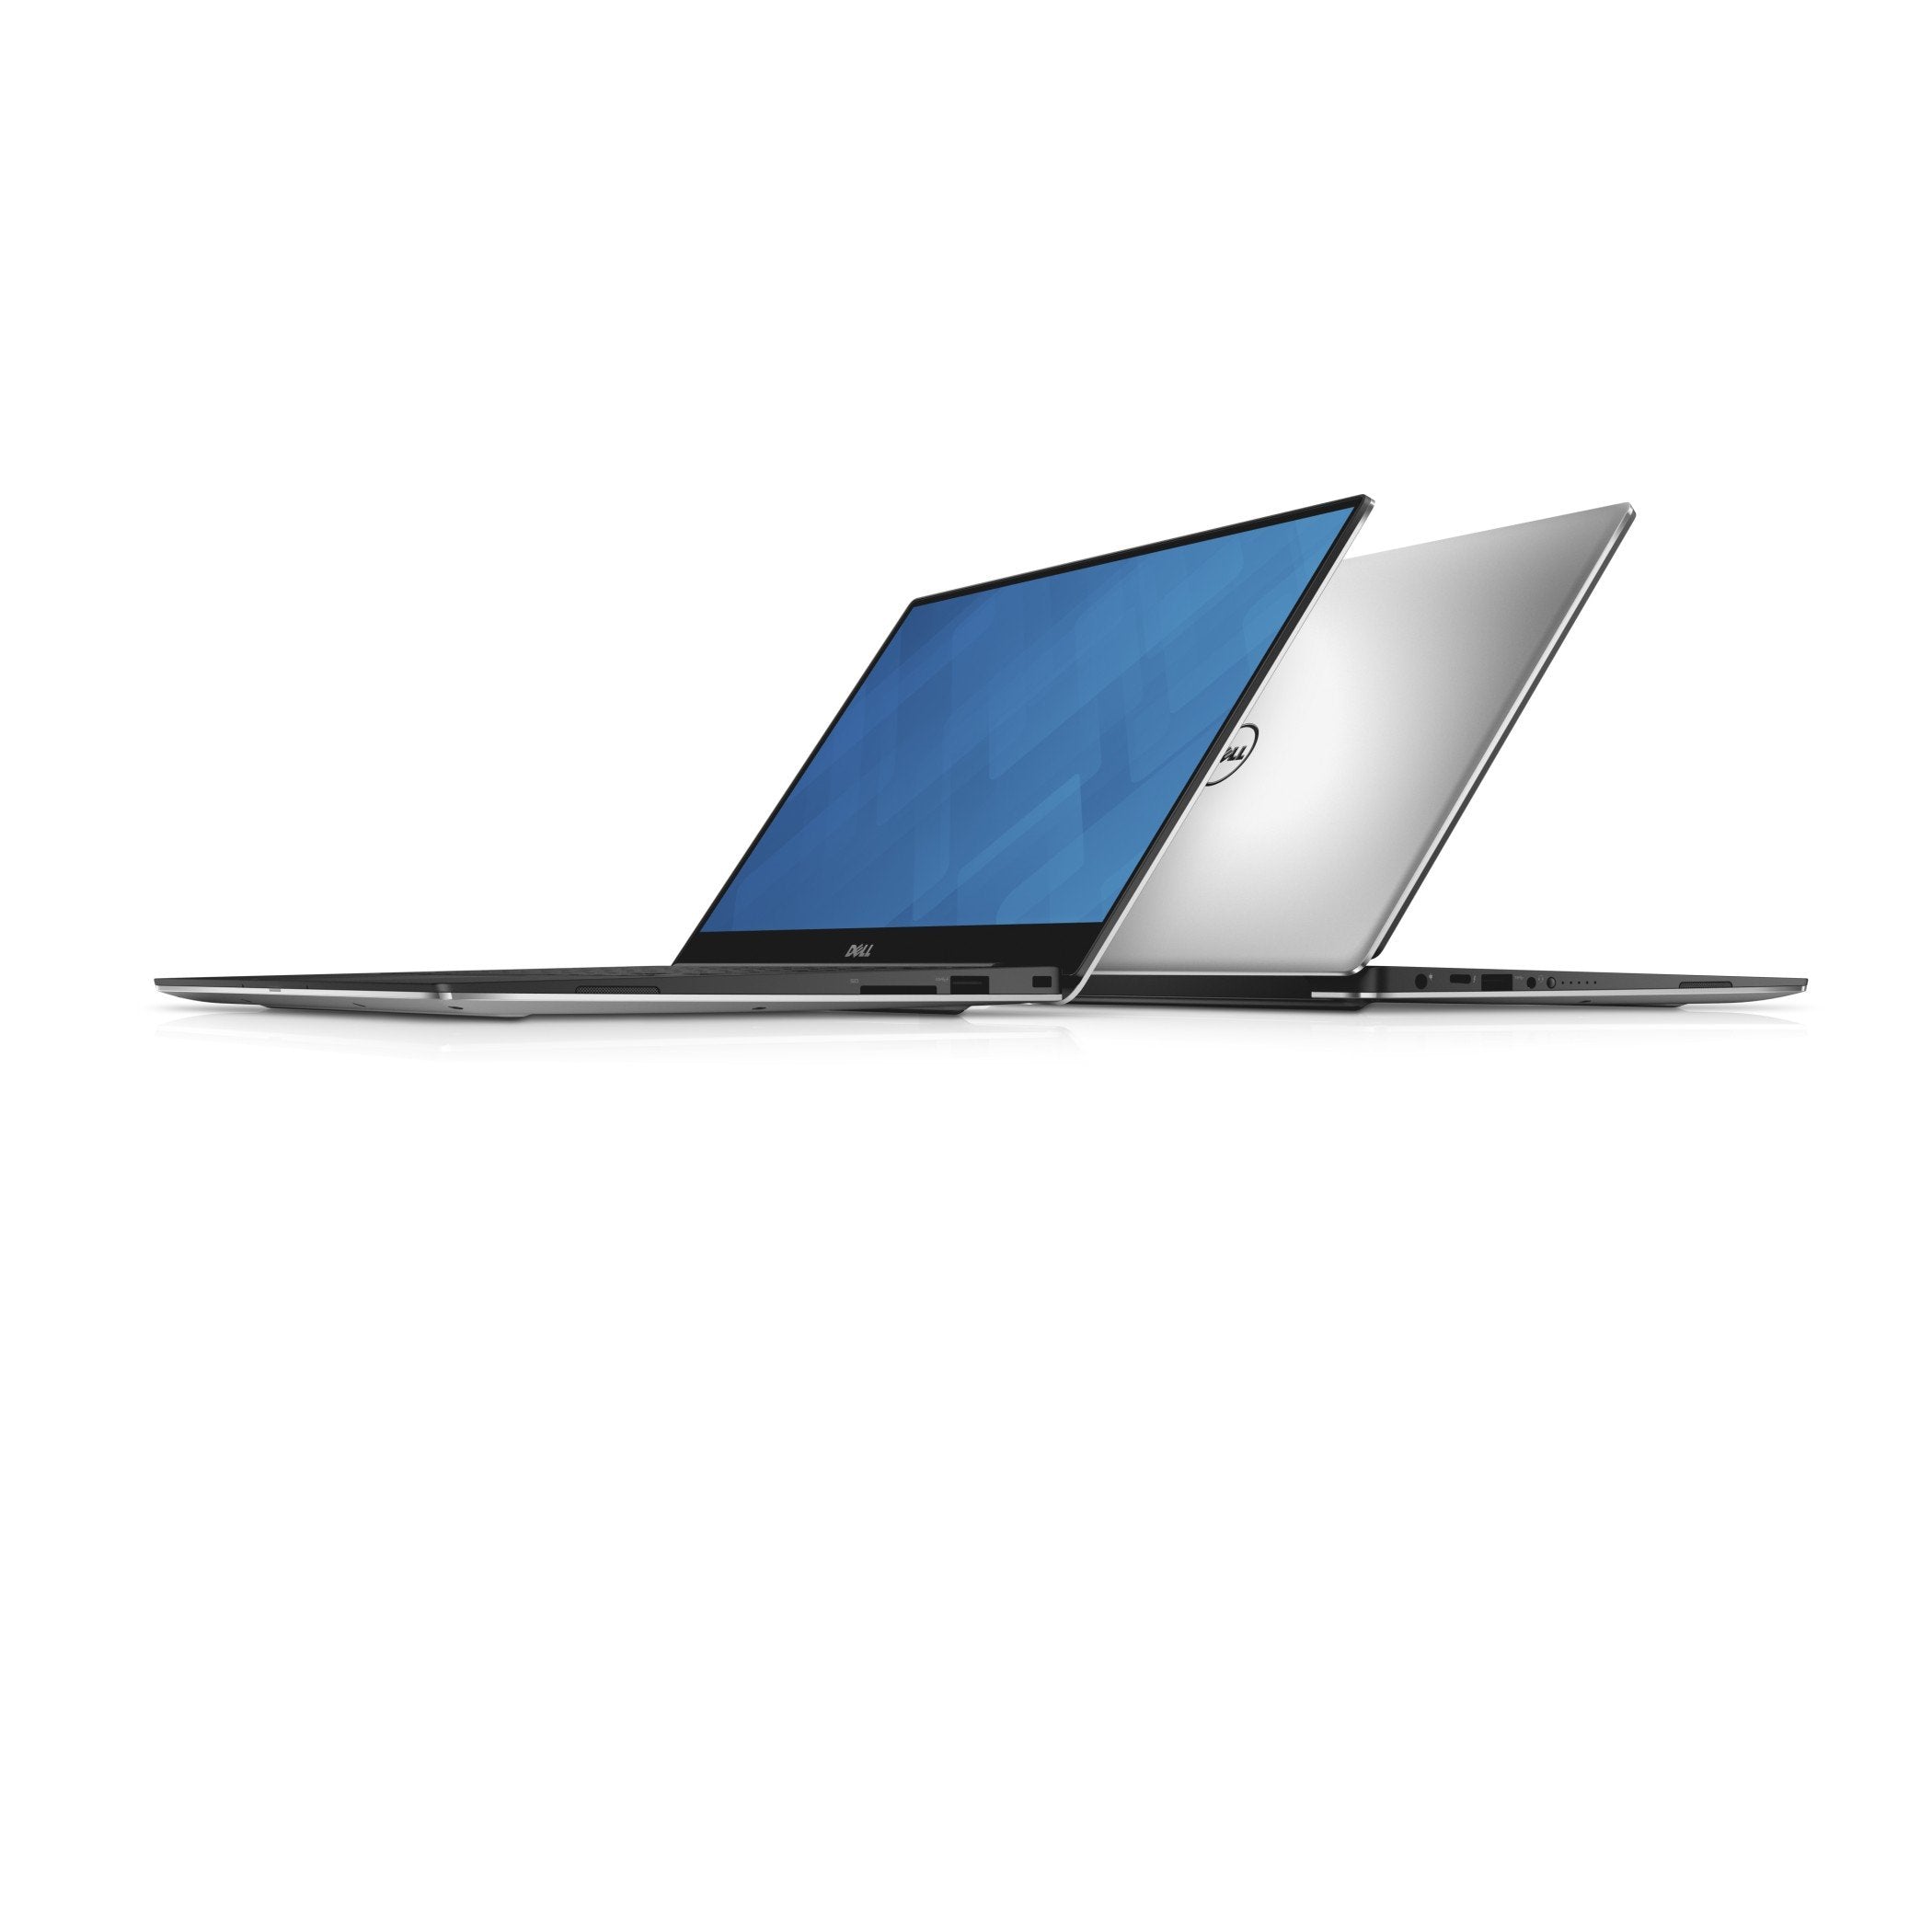 Dell XPS 13 9360 13.3” InfinityEdge 4K UHD Touchscreen Laptop – i7-7500U (4GHz), Intel Iris Plus Graphics, SD Card Reader, 16GB DDR4, 1TB SSD, WIFI 5 & BT 4.1, Windows 10 Pro, Backlit Keys